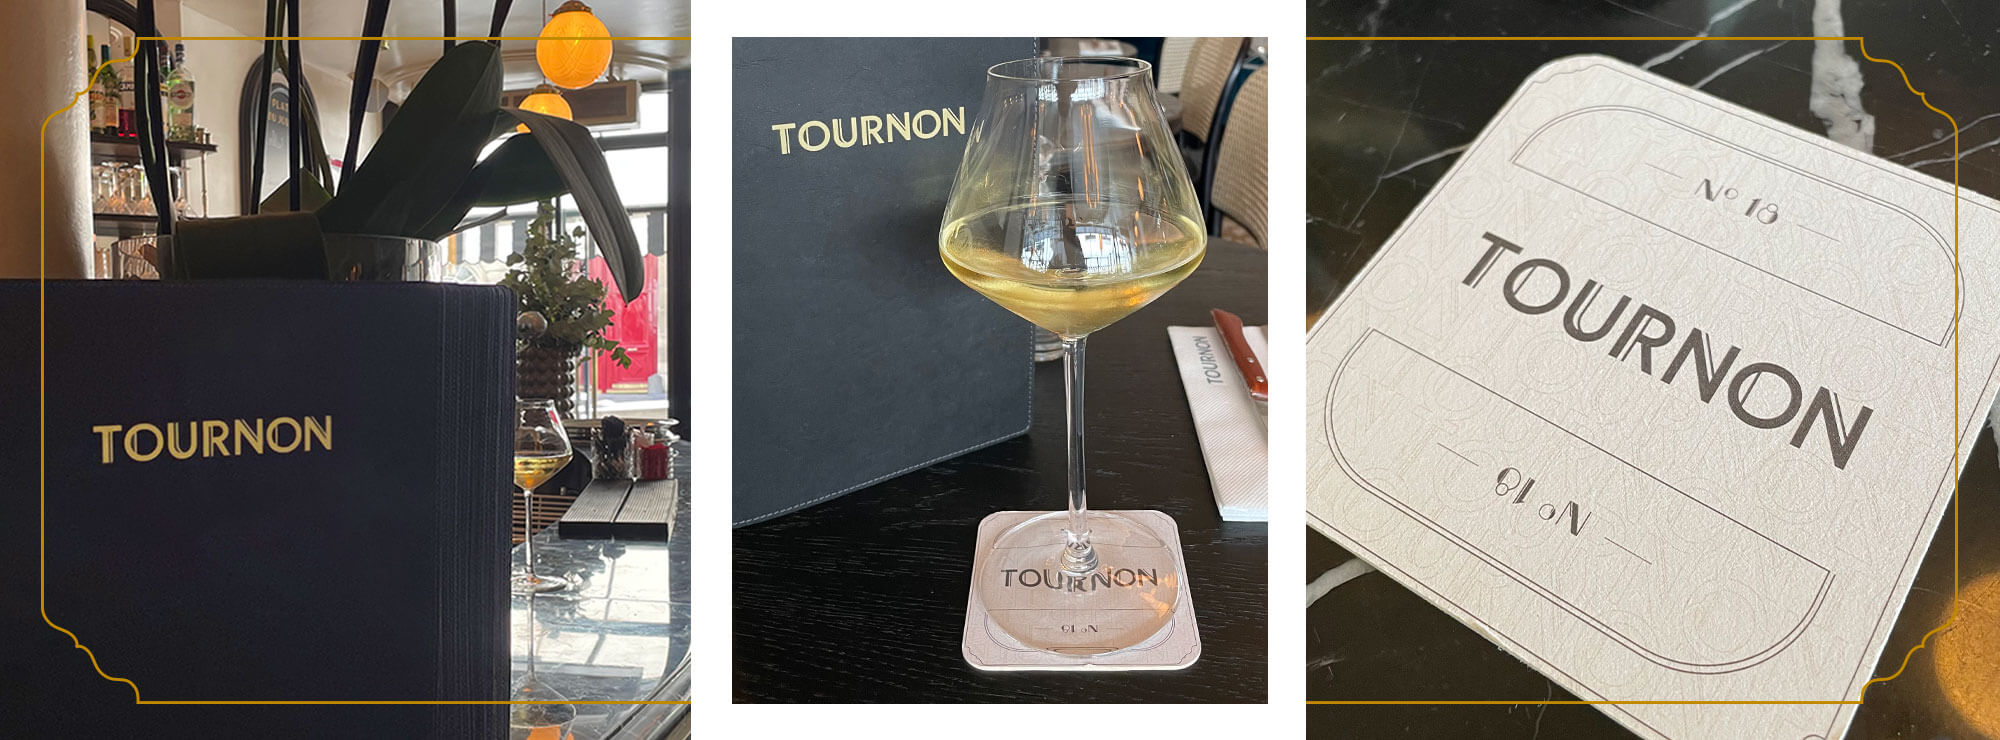 04 tournon visual identity logo restaurant wine menu bar coaster.jpg